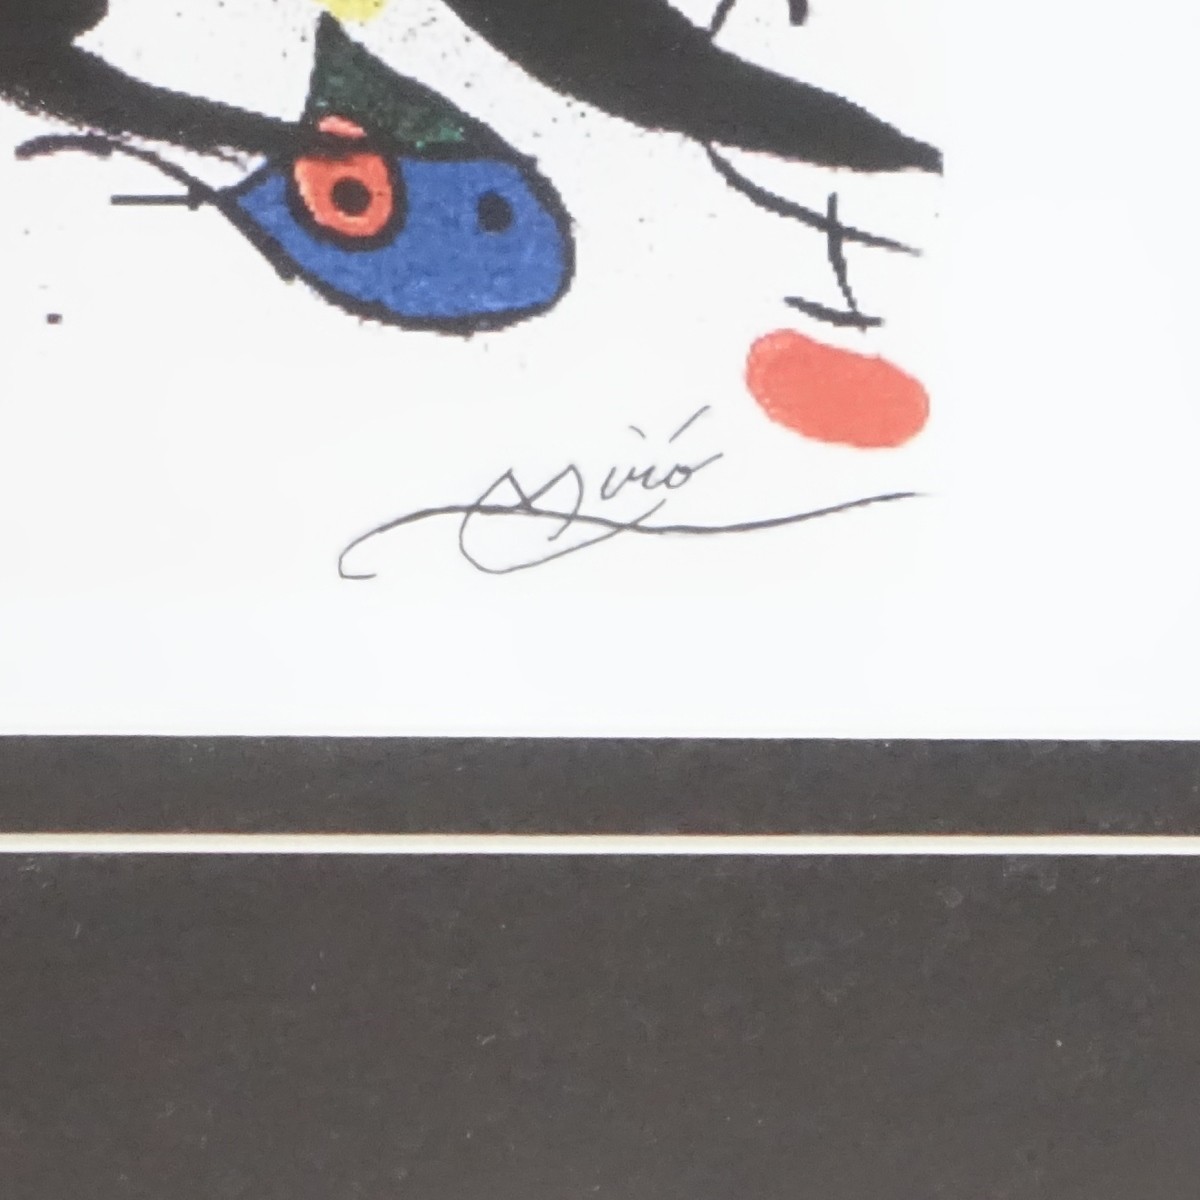 After: Joan Miro, Spanish (1893 - 1983)